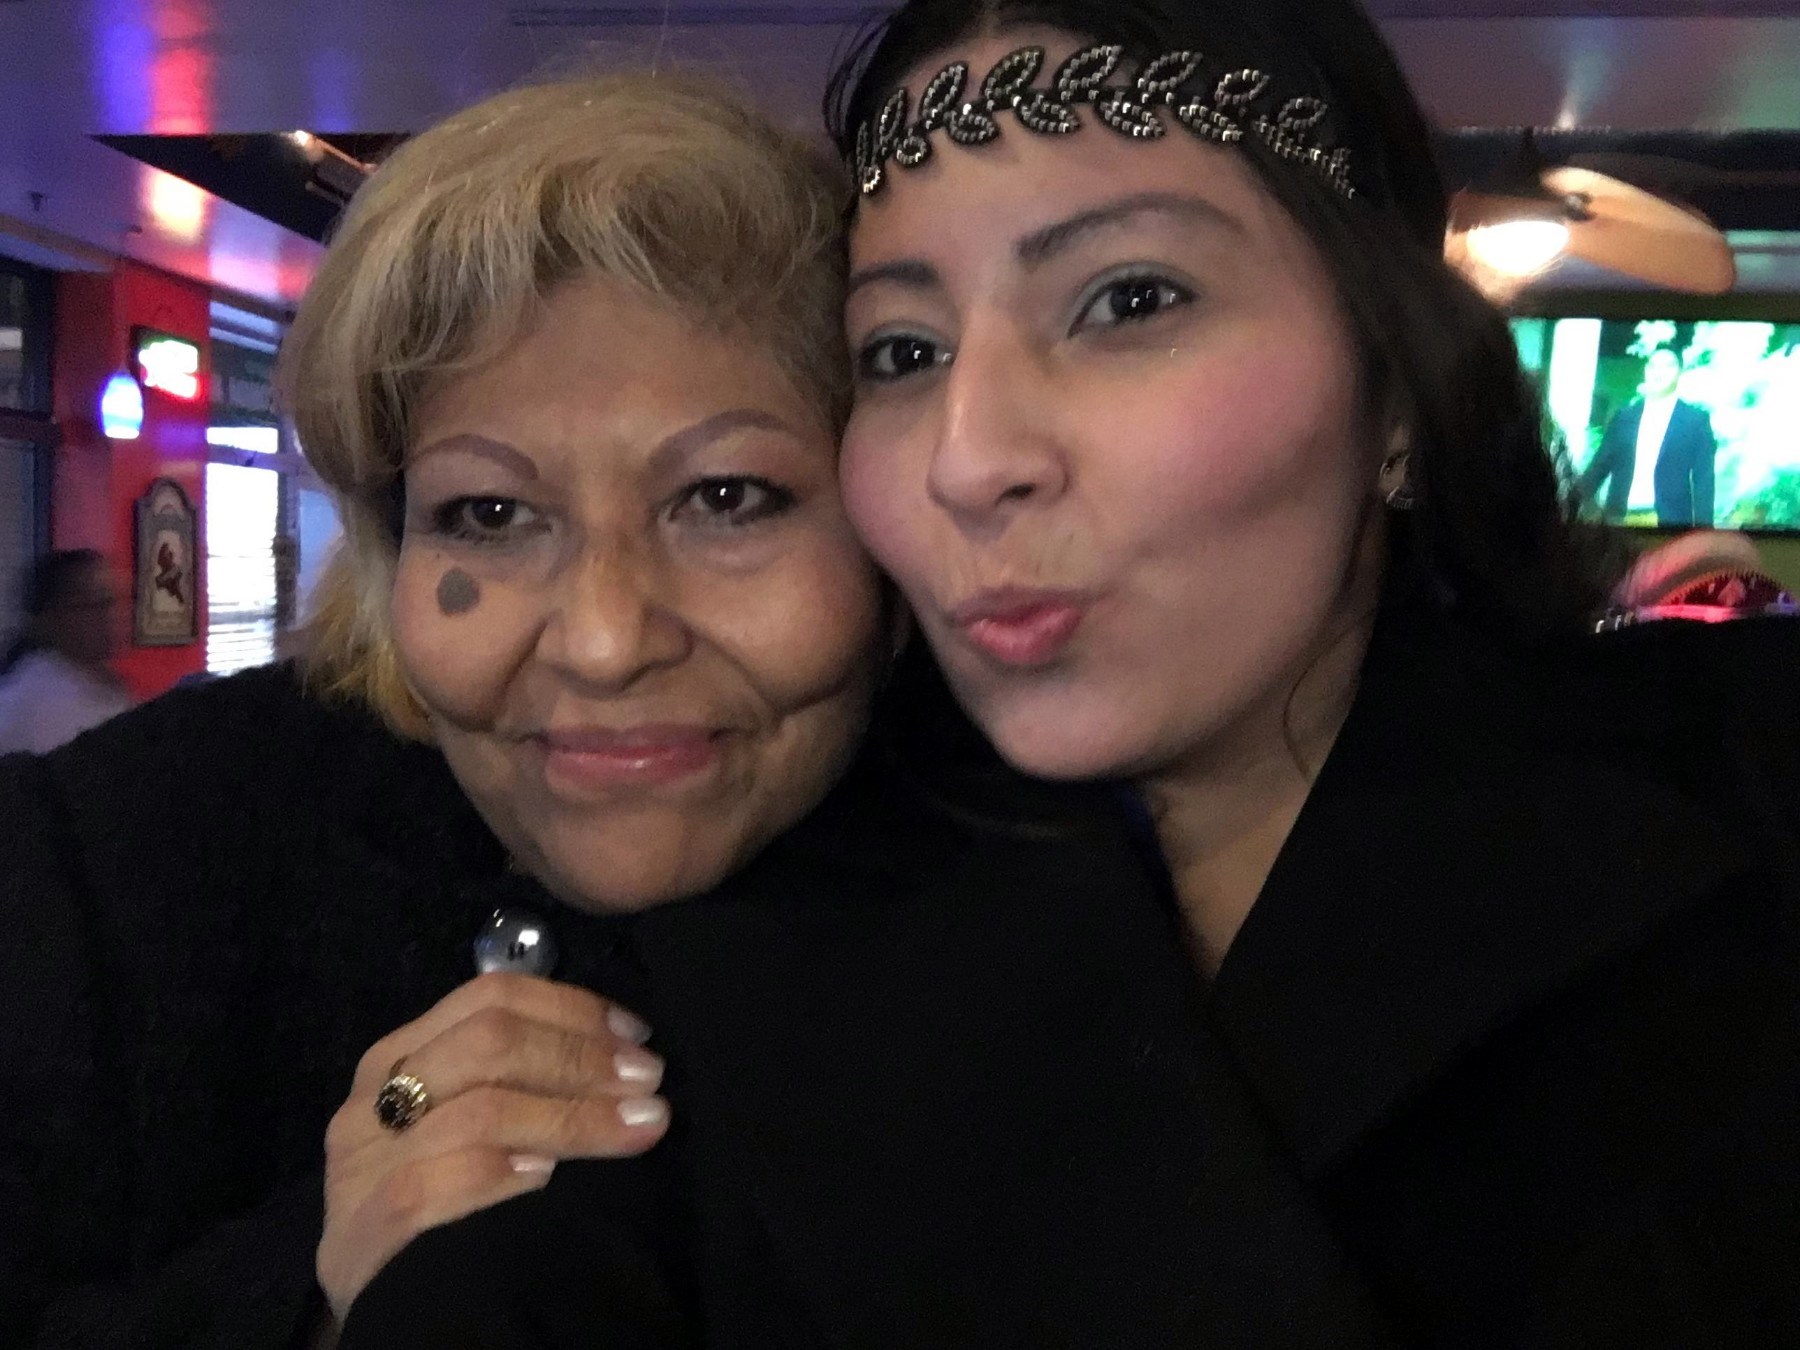 Maria Mata Obituary - Las Vegas, NV